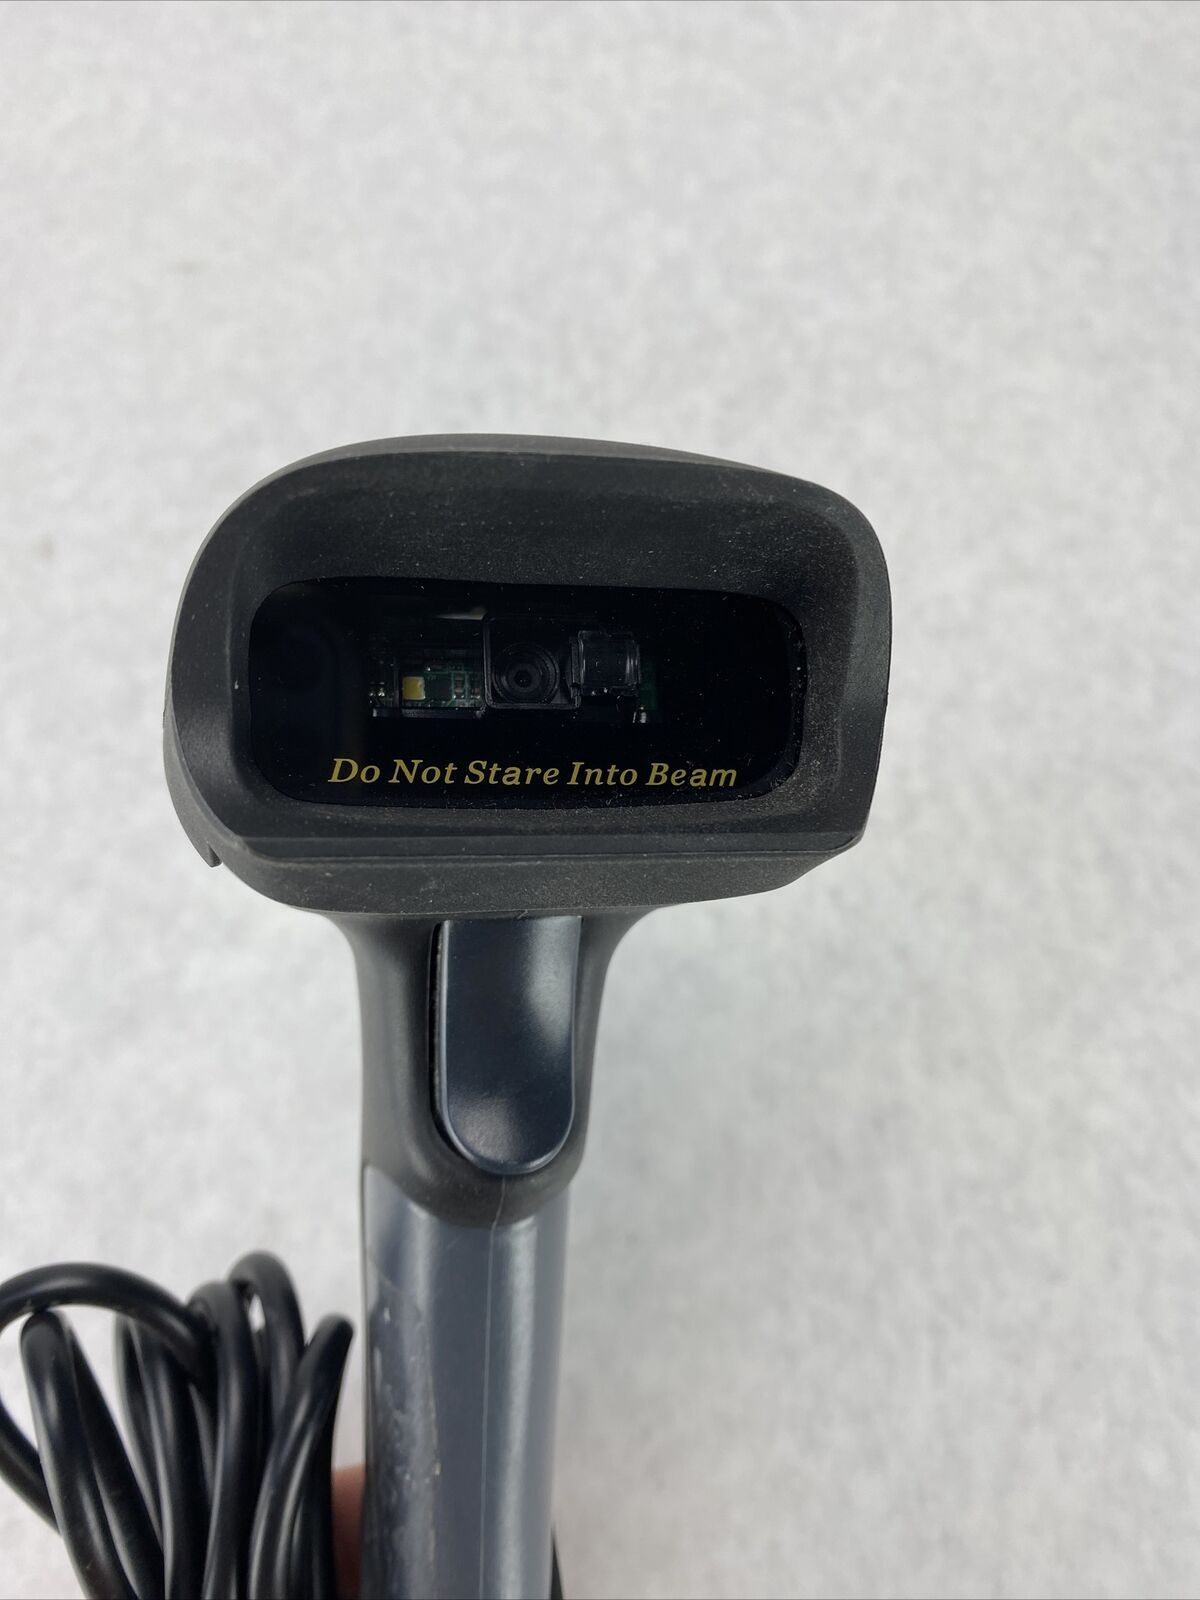 Eyoyo Handheld Wired USB Barcode Scanner Gray TESTED